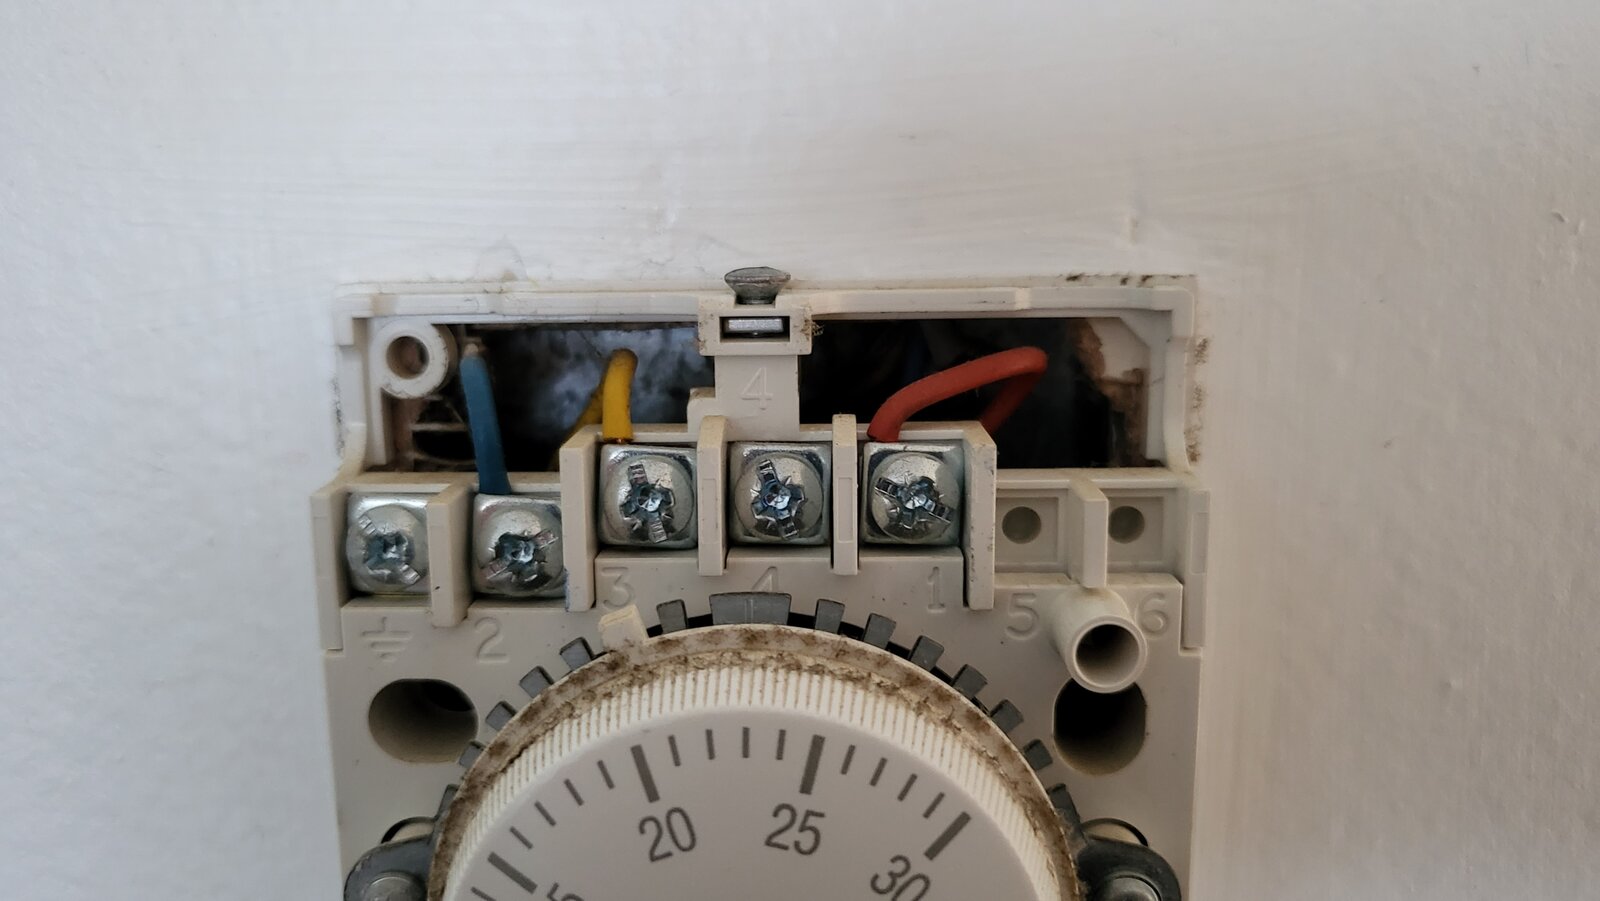 3 thermostat.jpg